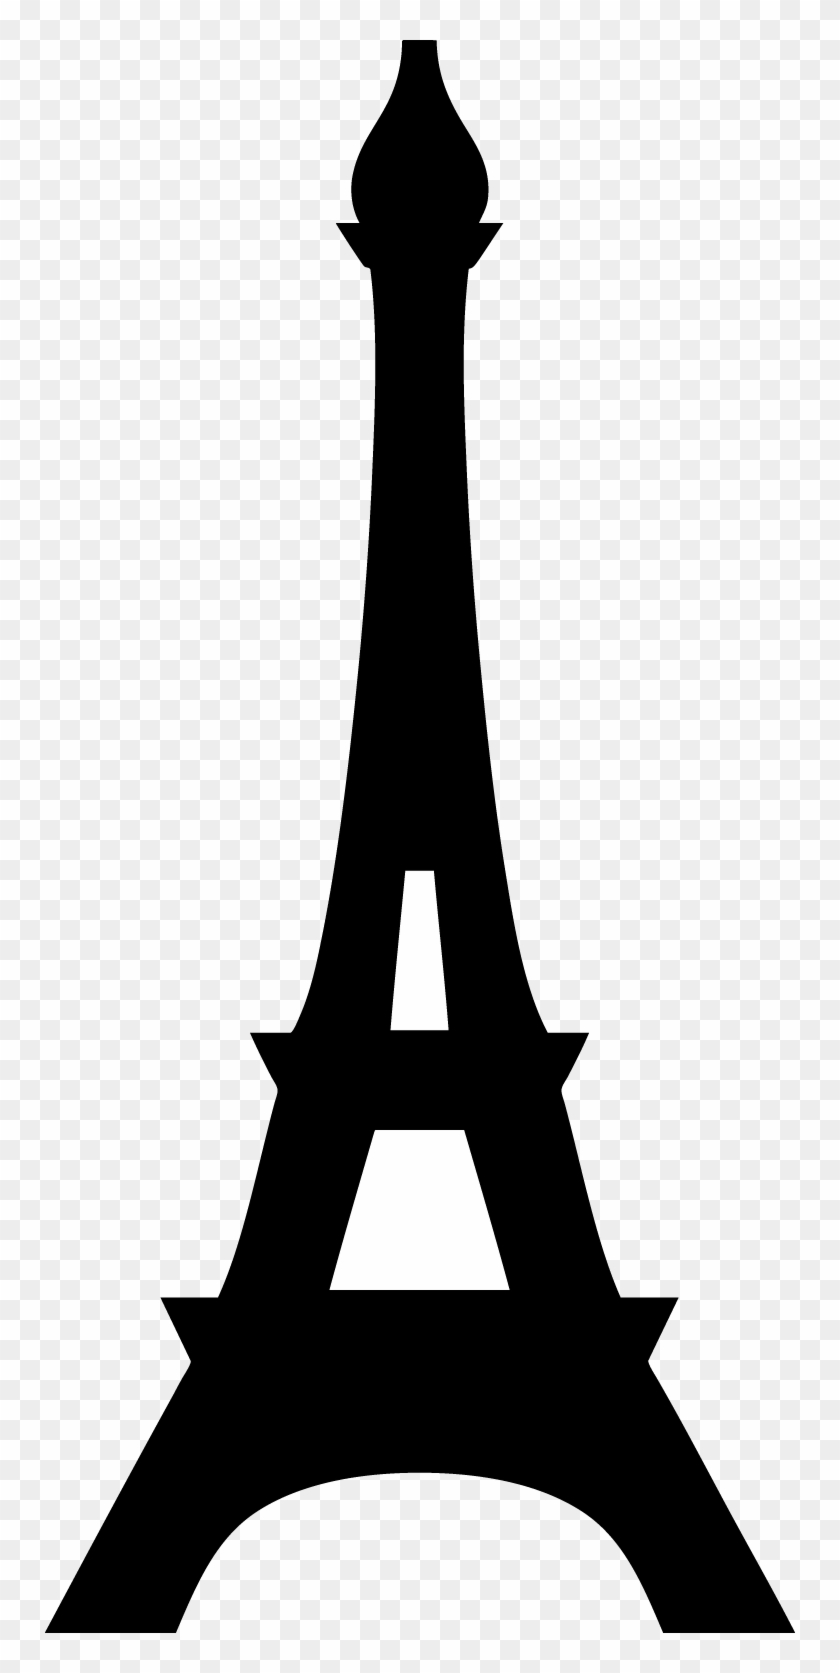 Clipart Library Download Best Photos Of Paris Eiffel - Eiffel Tower Silhouette Png Transparent Png